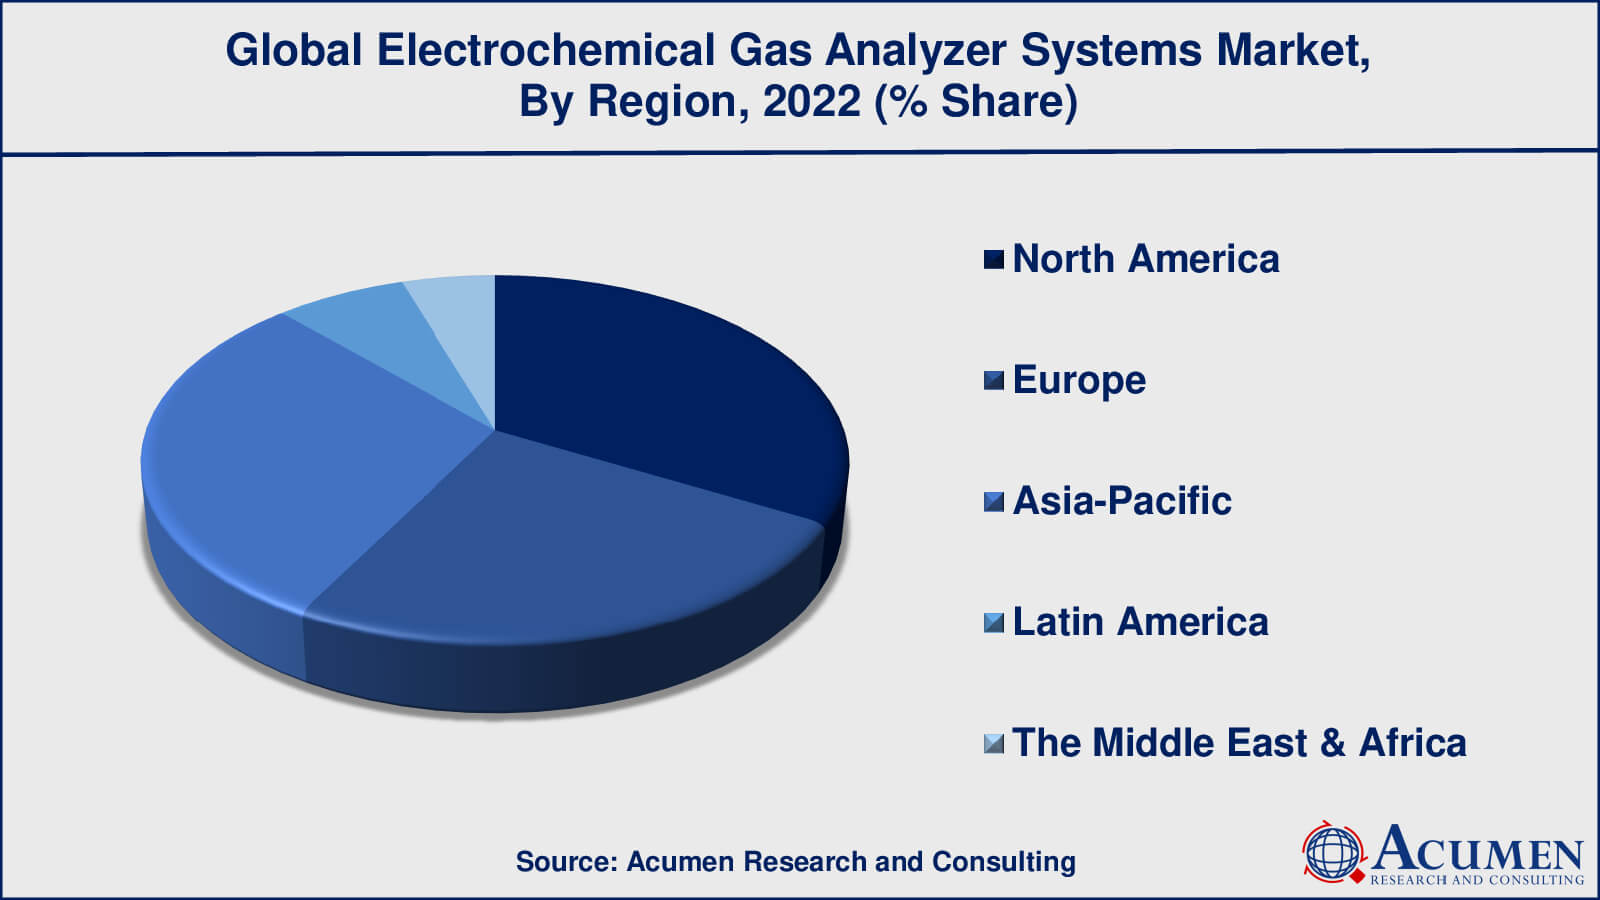 Electrochemical Gas Analyzer Systems Market Drivers